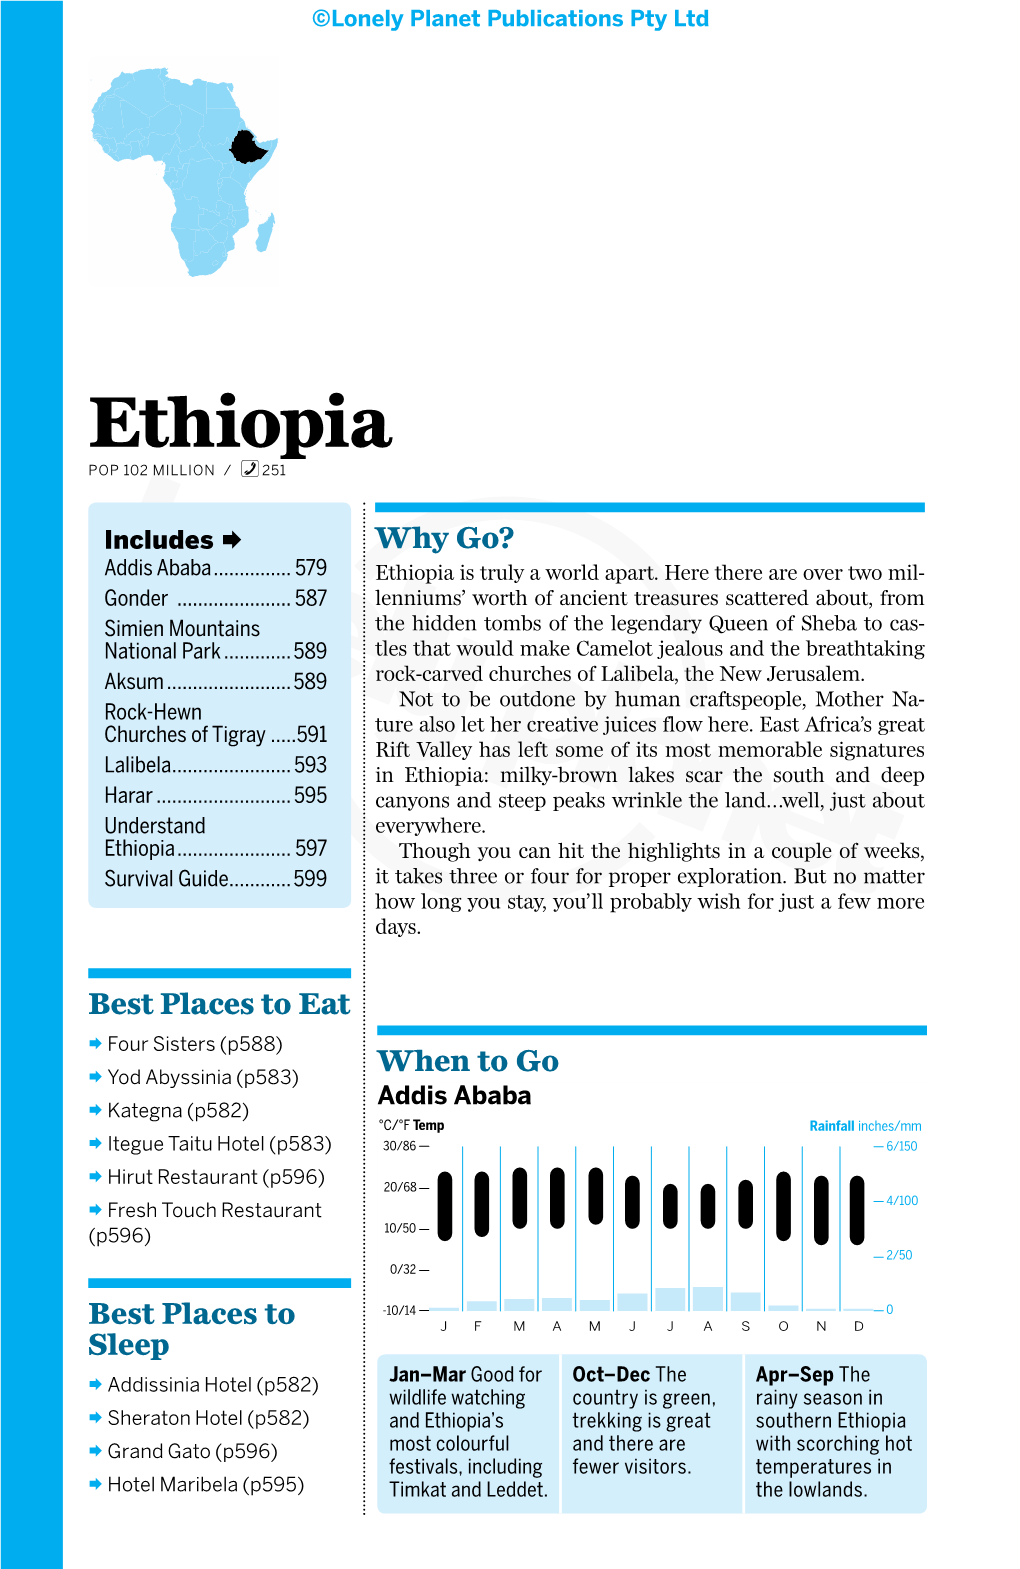 Ethiopia% POP 102 MILLION / 251